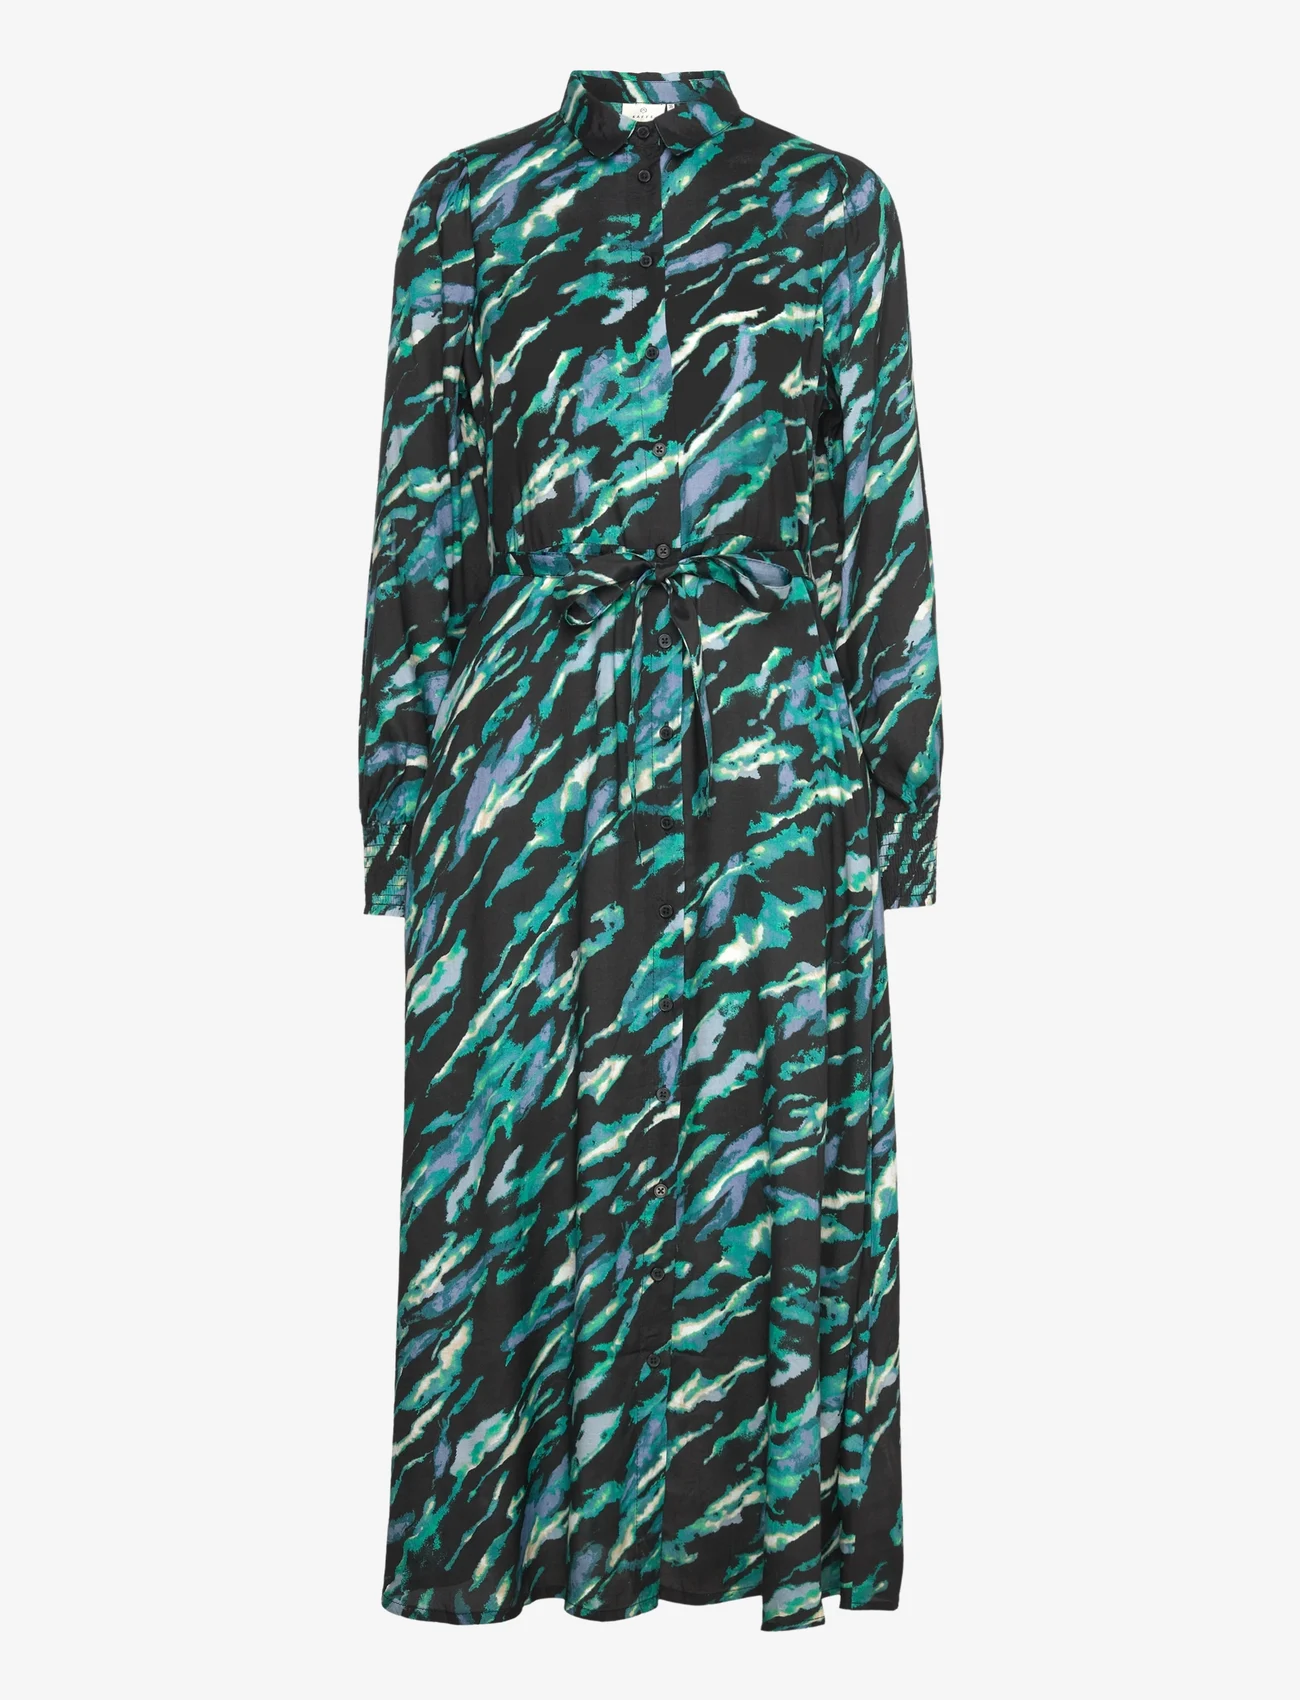 Kaffe - KApollie Oline Dress - sukienki koszulowe - black/blue/green abstr. animal - 0